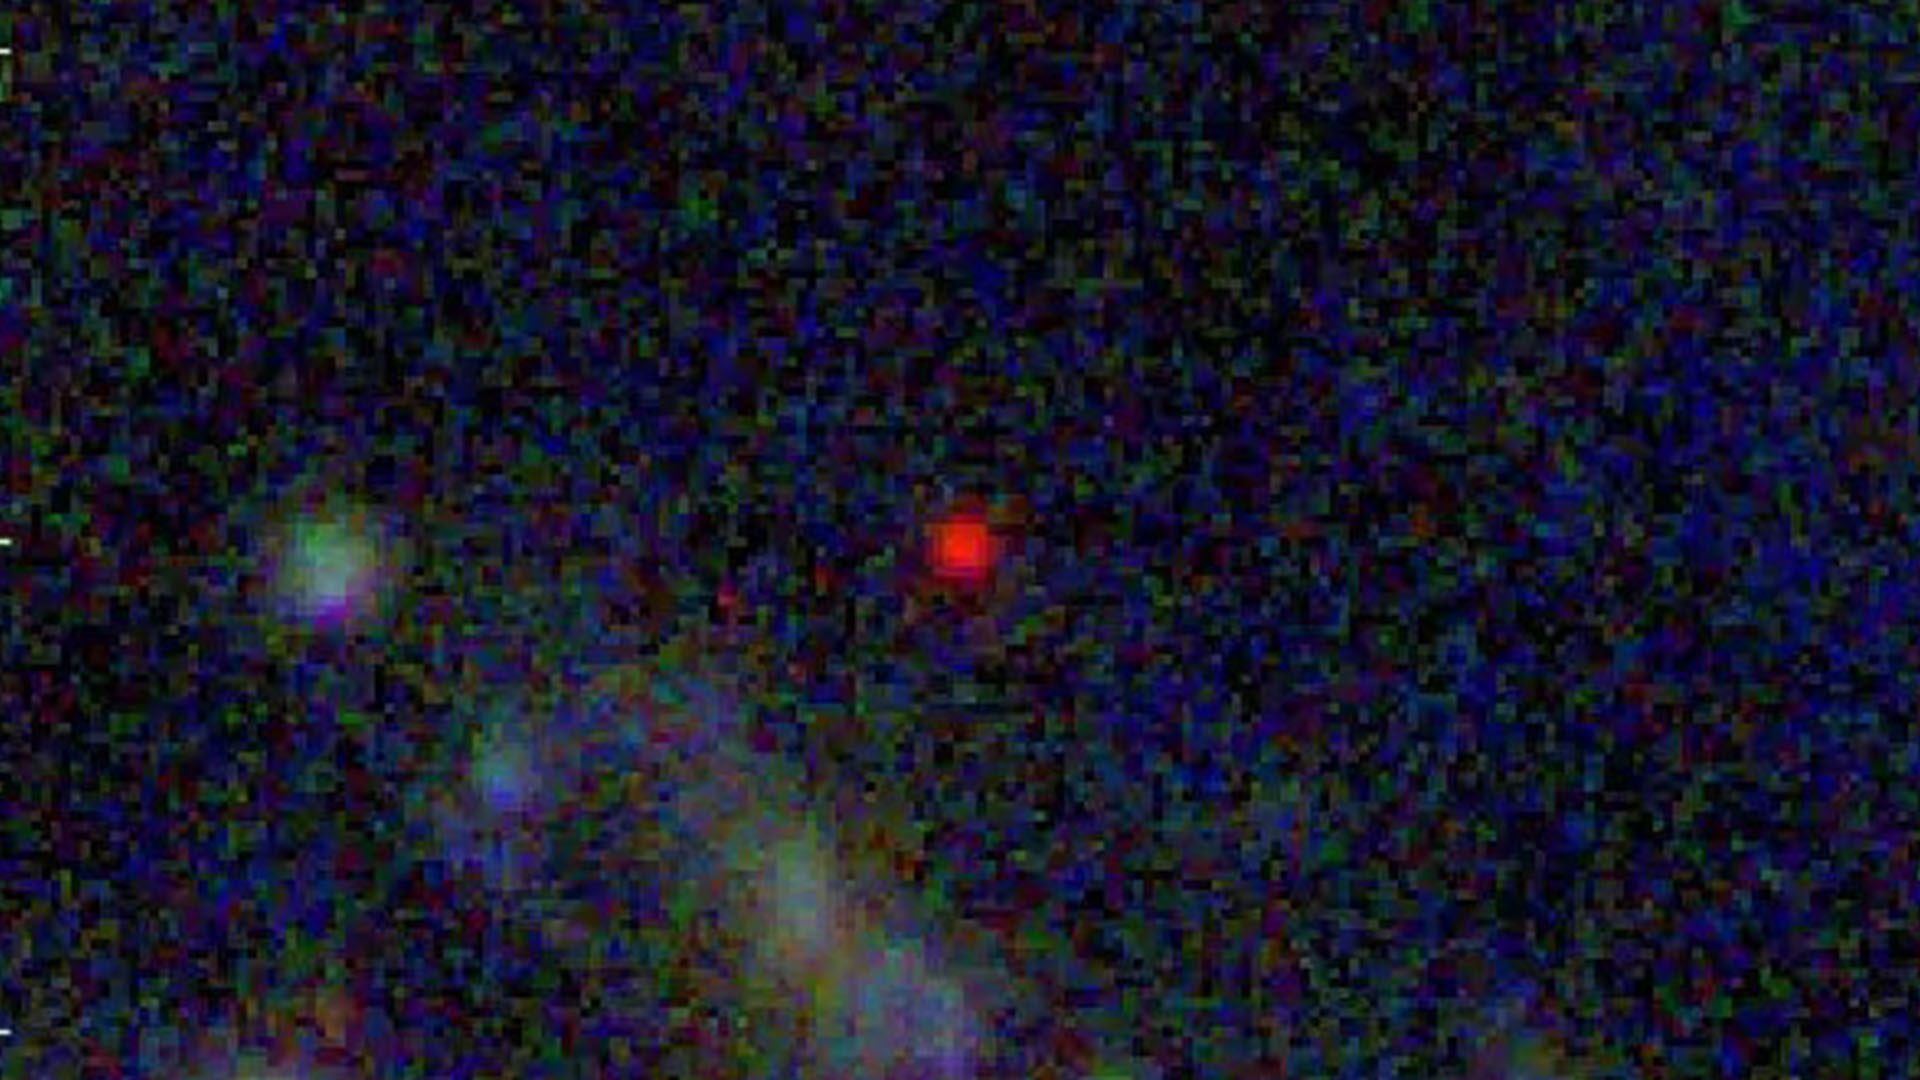 GLASS-z13 from the James Webb Telescope